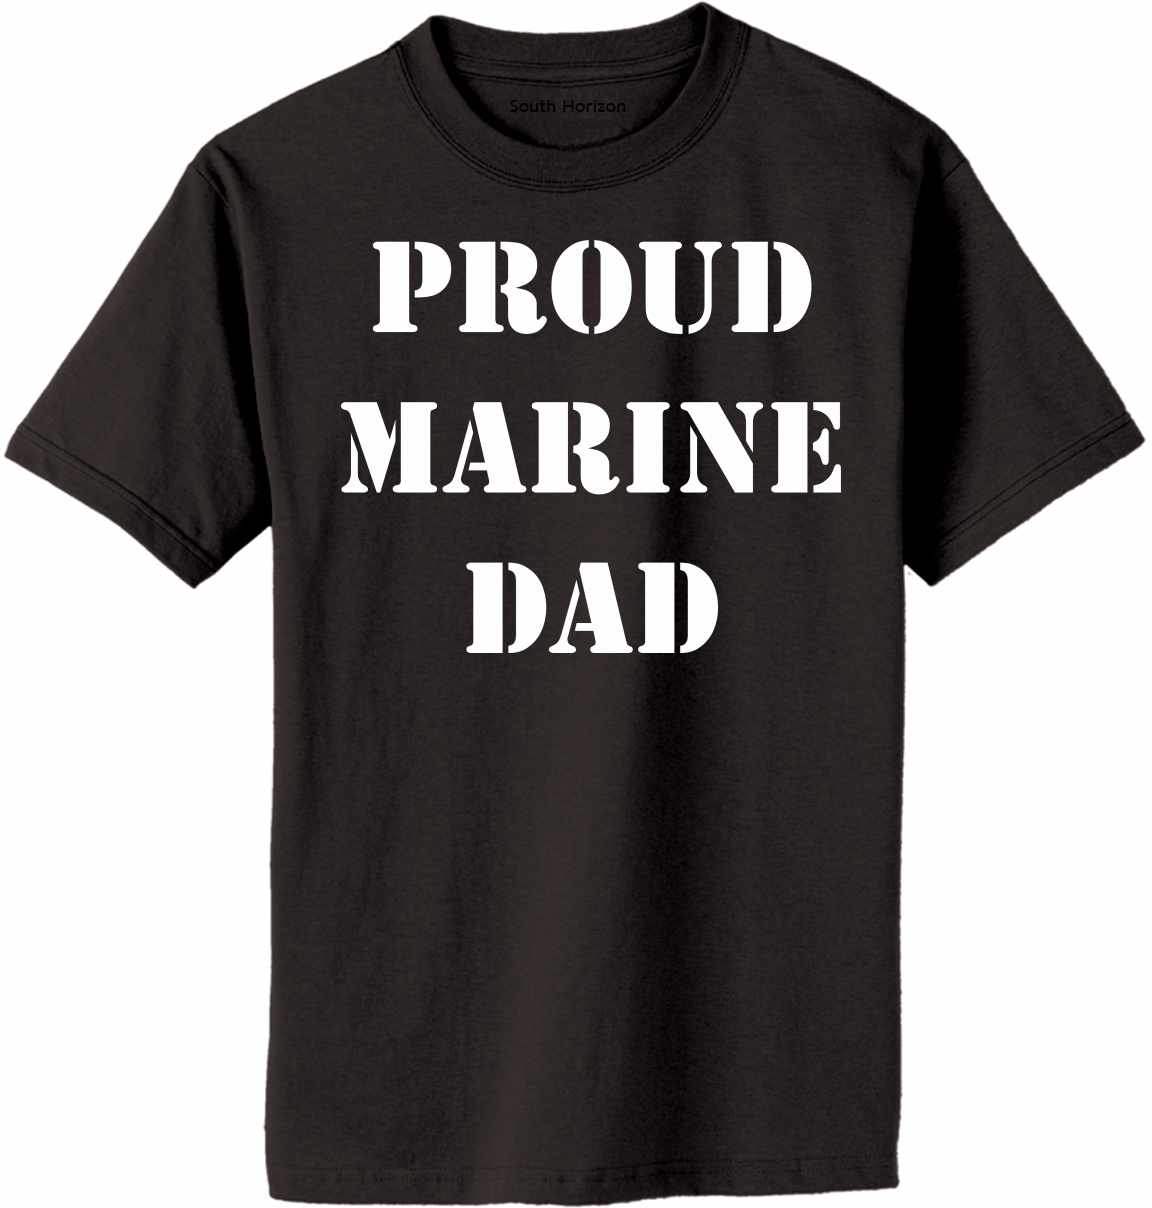 PROUD MARINE DAD Adult T-Shirt